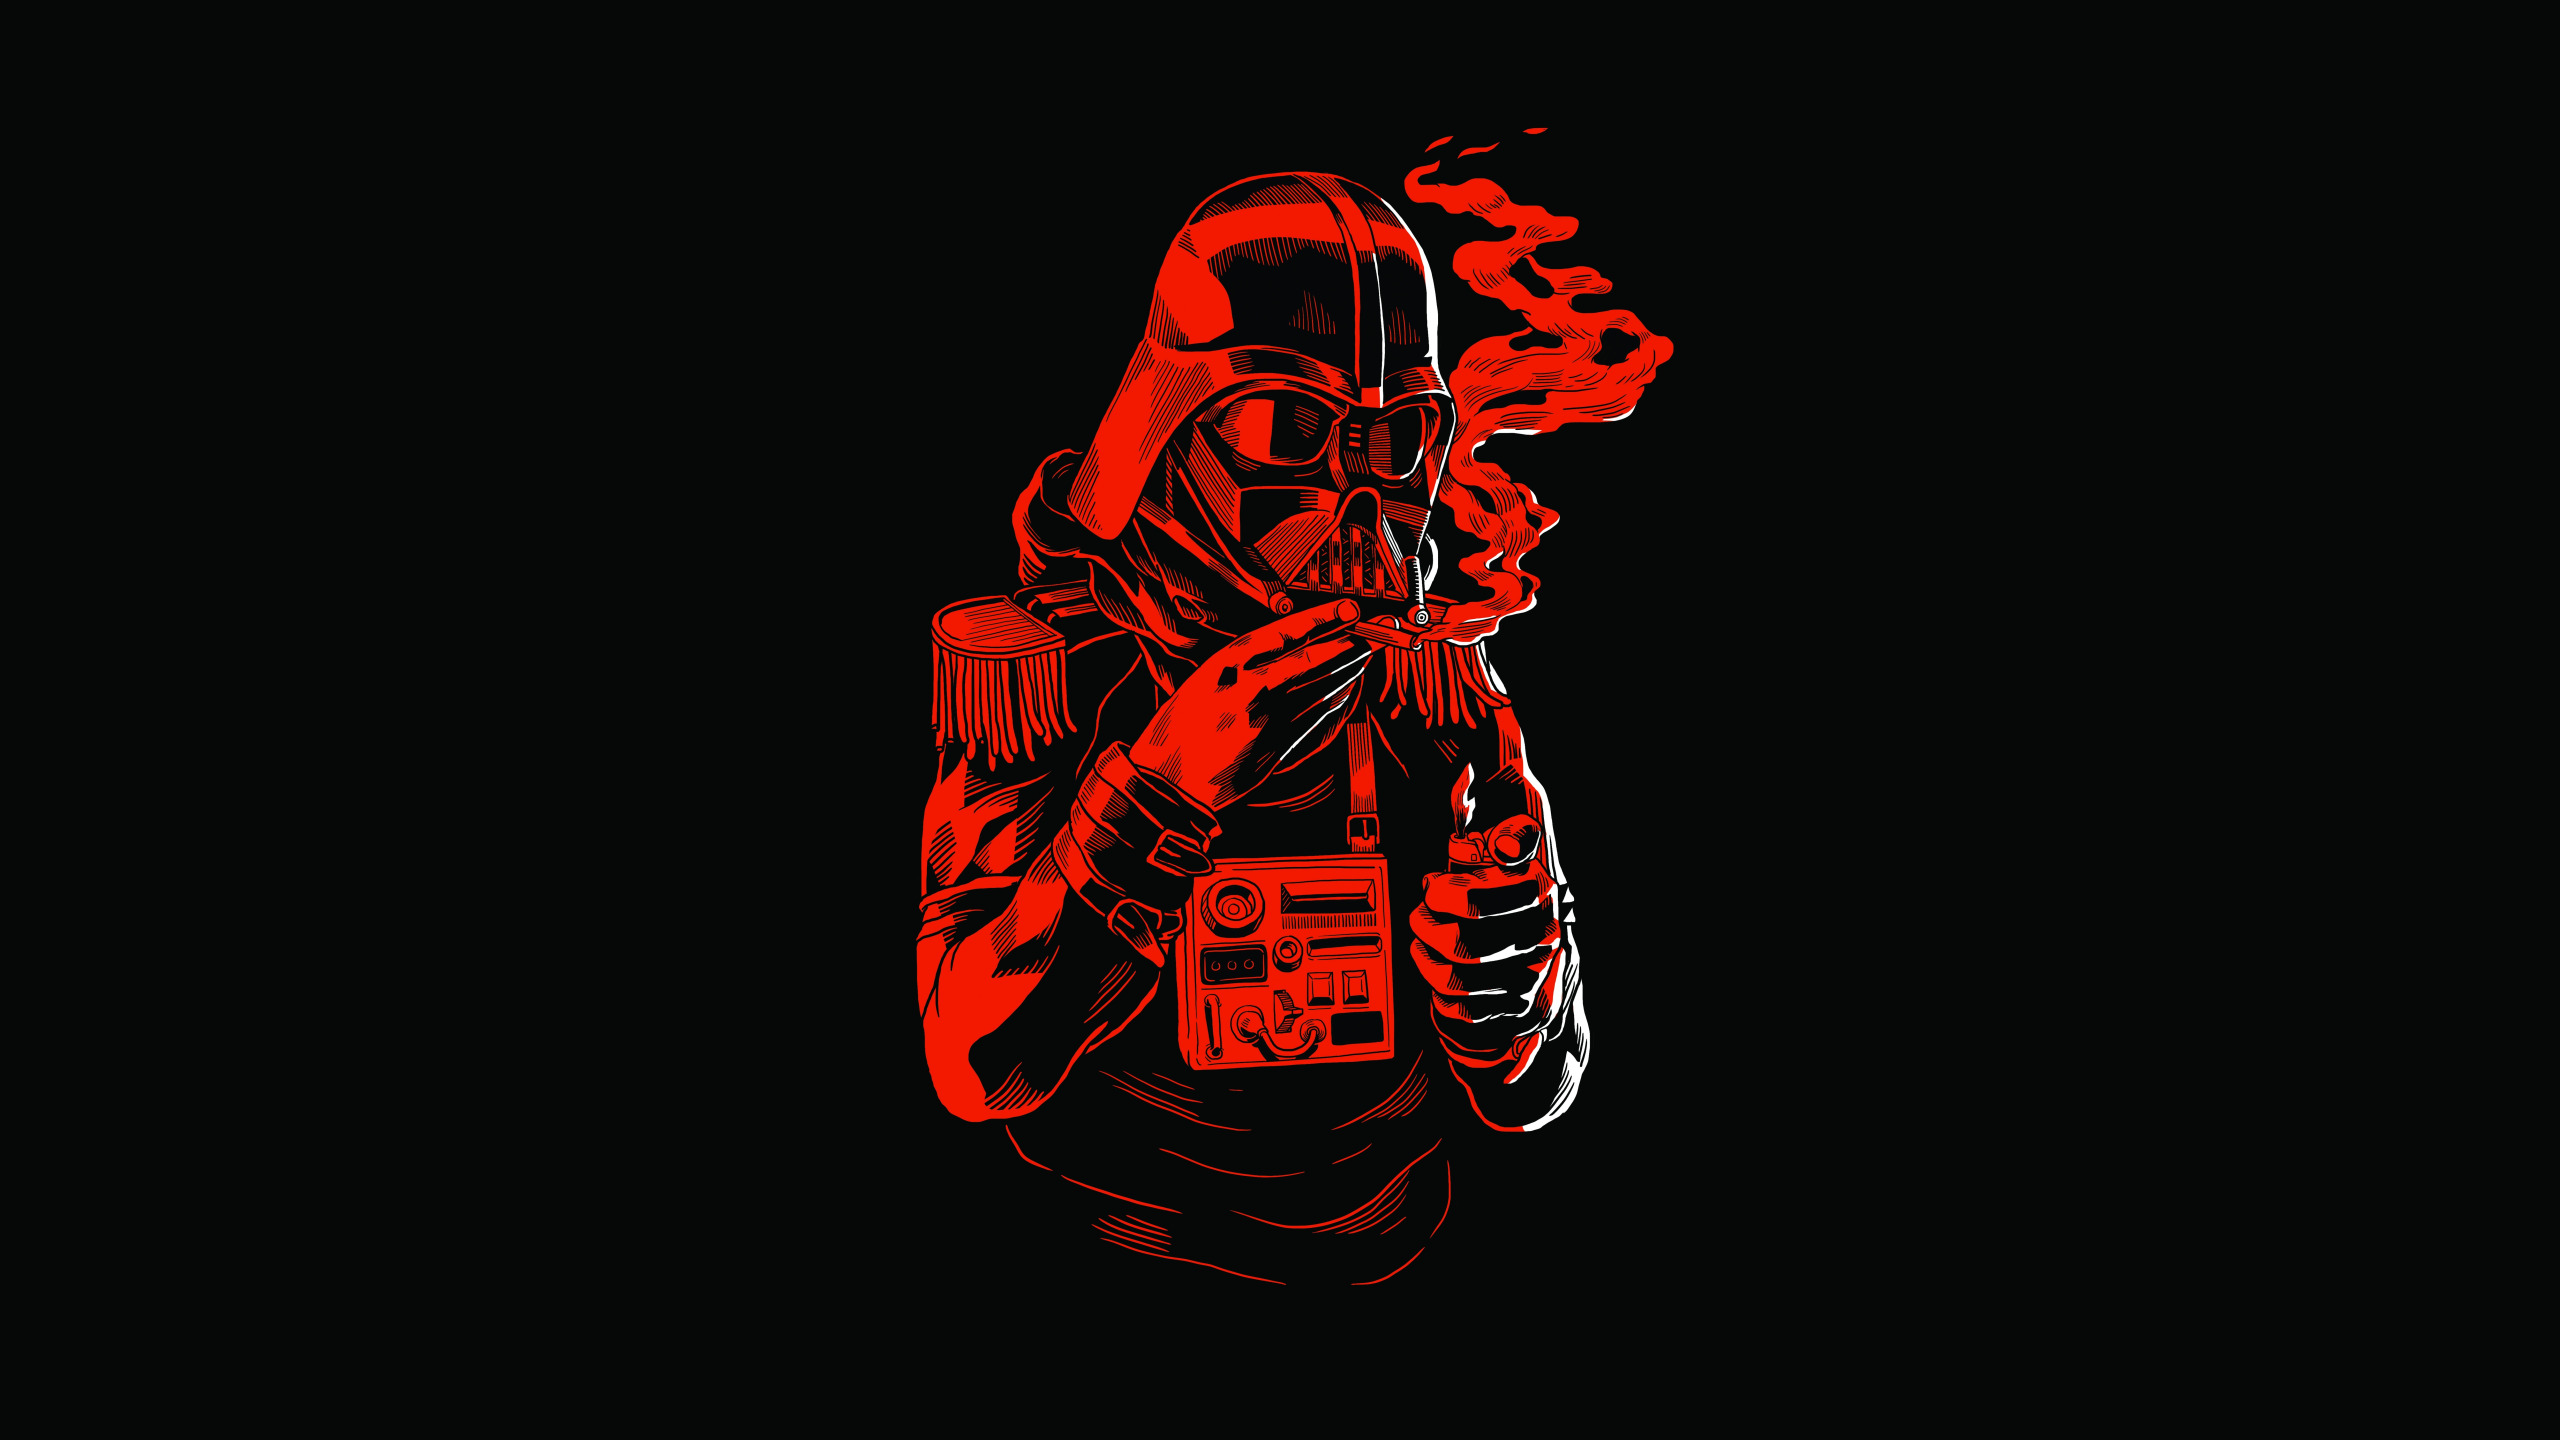 Download wallpaper red, black, buttons, lighter, Dark Vader, Star Wars  helmet, cigariilo, fringes, section minimalism in resolution 2560x1440